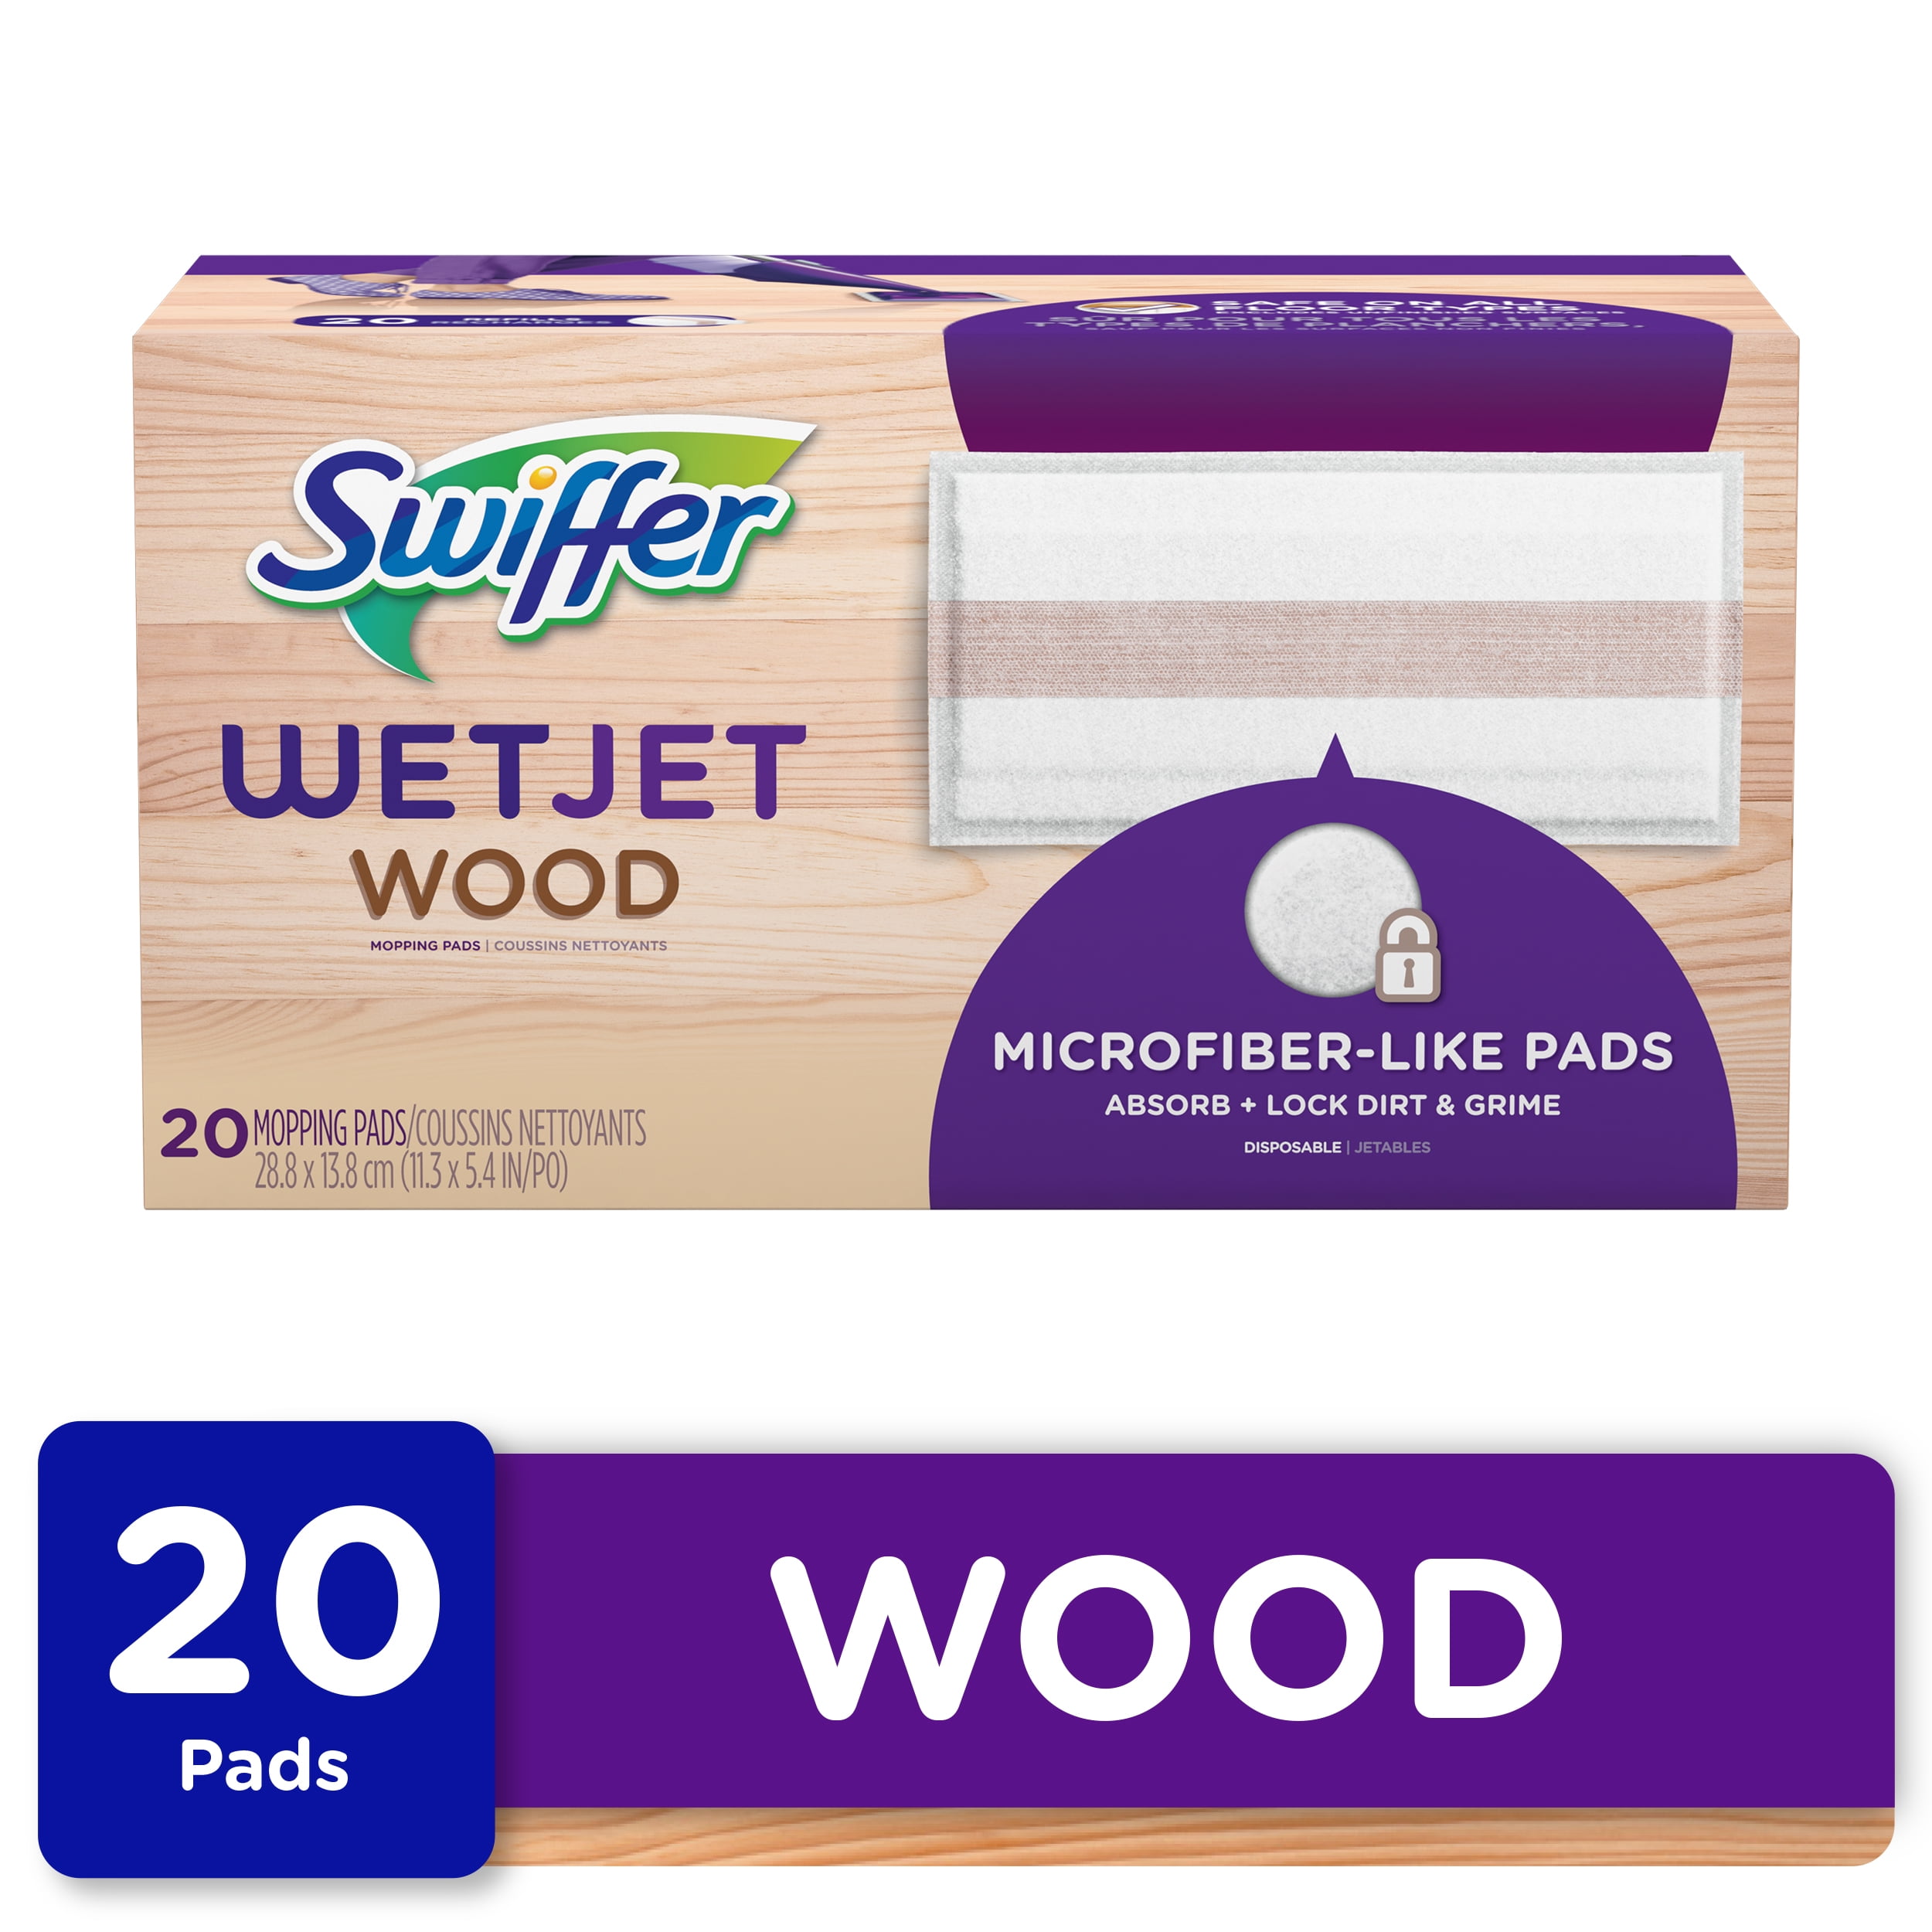 Swiffer Wetjet Wood Mop Pad Refills 20, Can I Use Swiffer Wet On Hardwood Floors